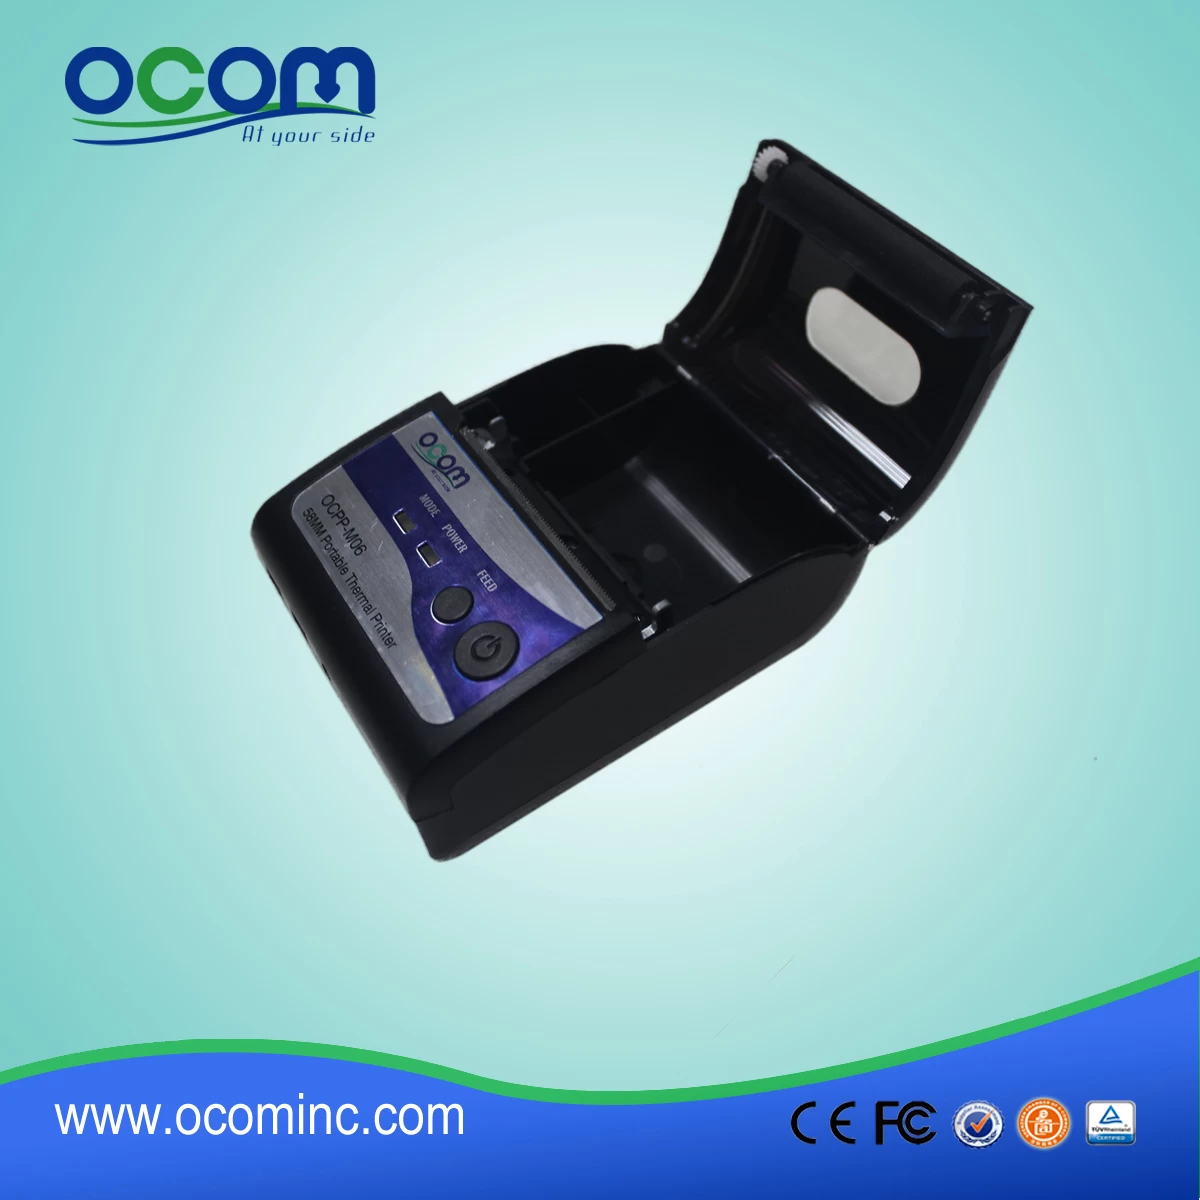 (OCPP-M06)China factory OCOM 58mm thermal  printer, thermal  printer cheap